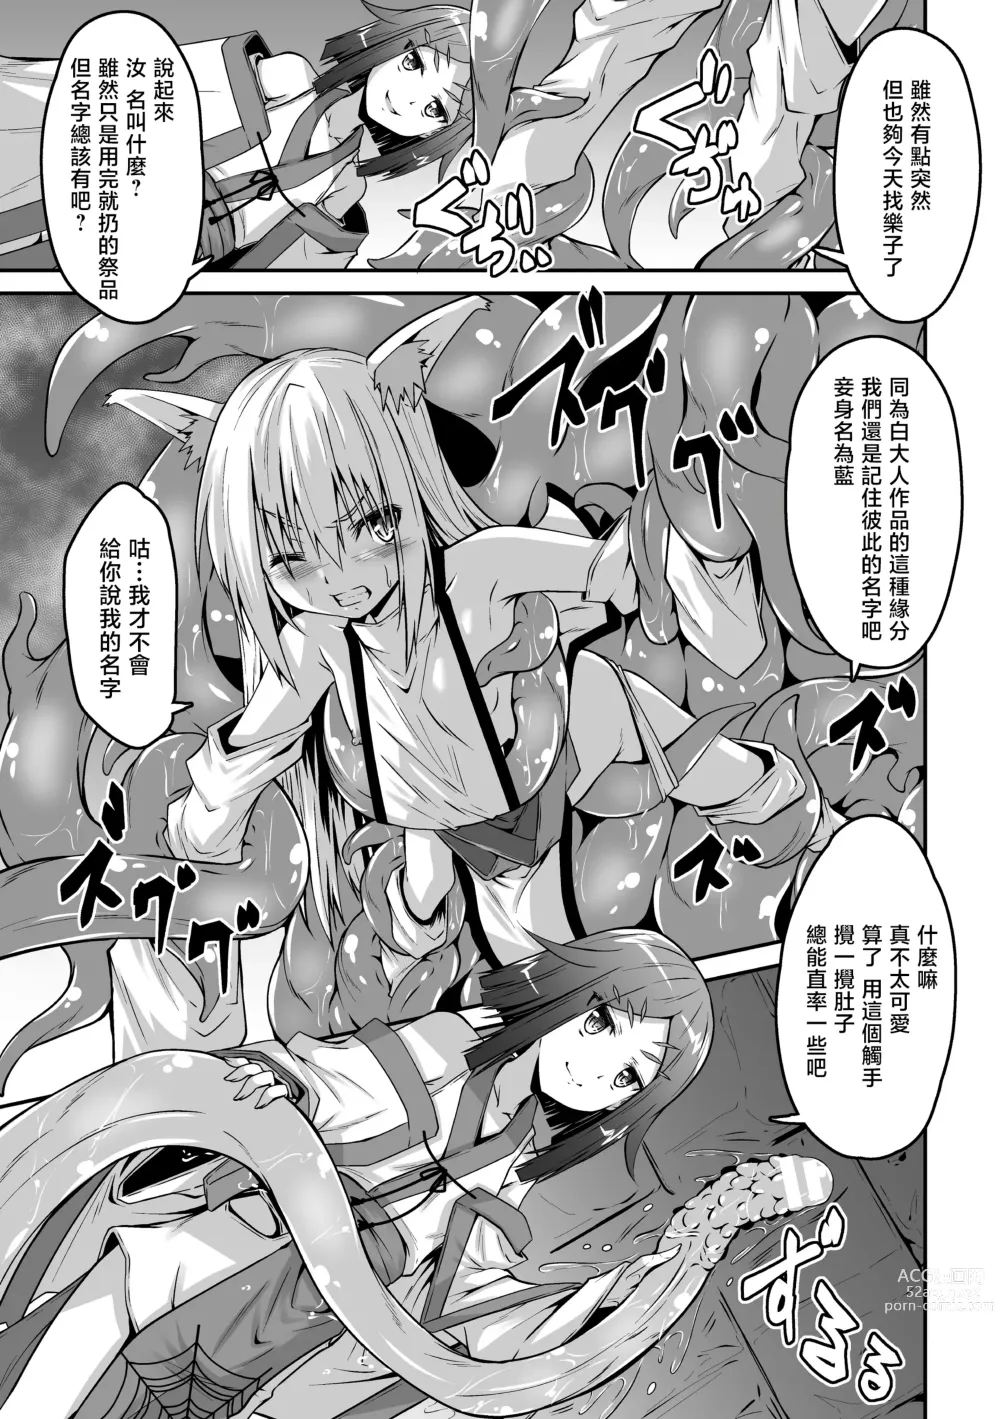 Page 12 of manga Youko Inmon Kitan 5